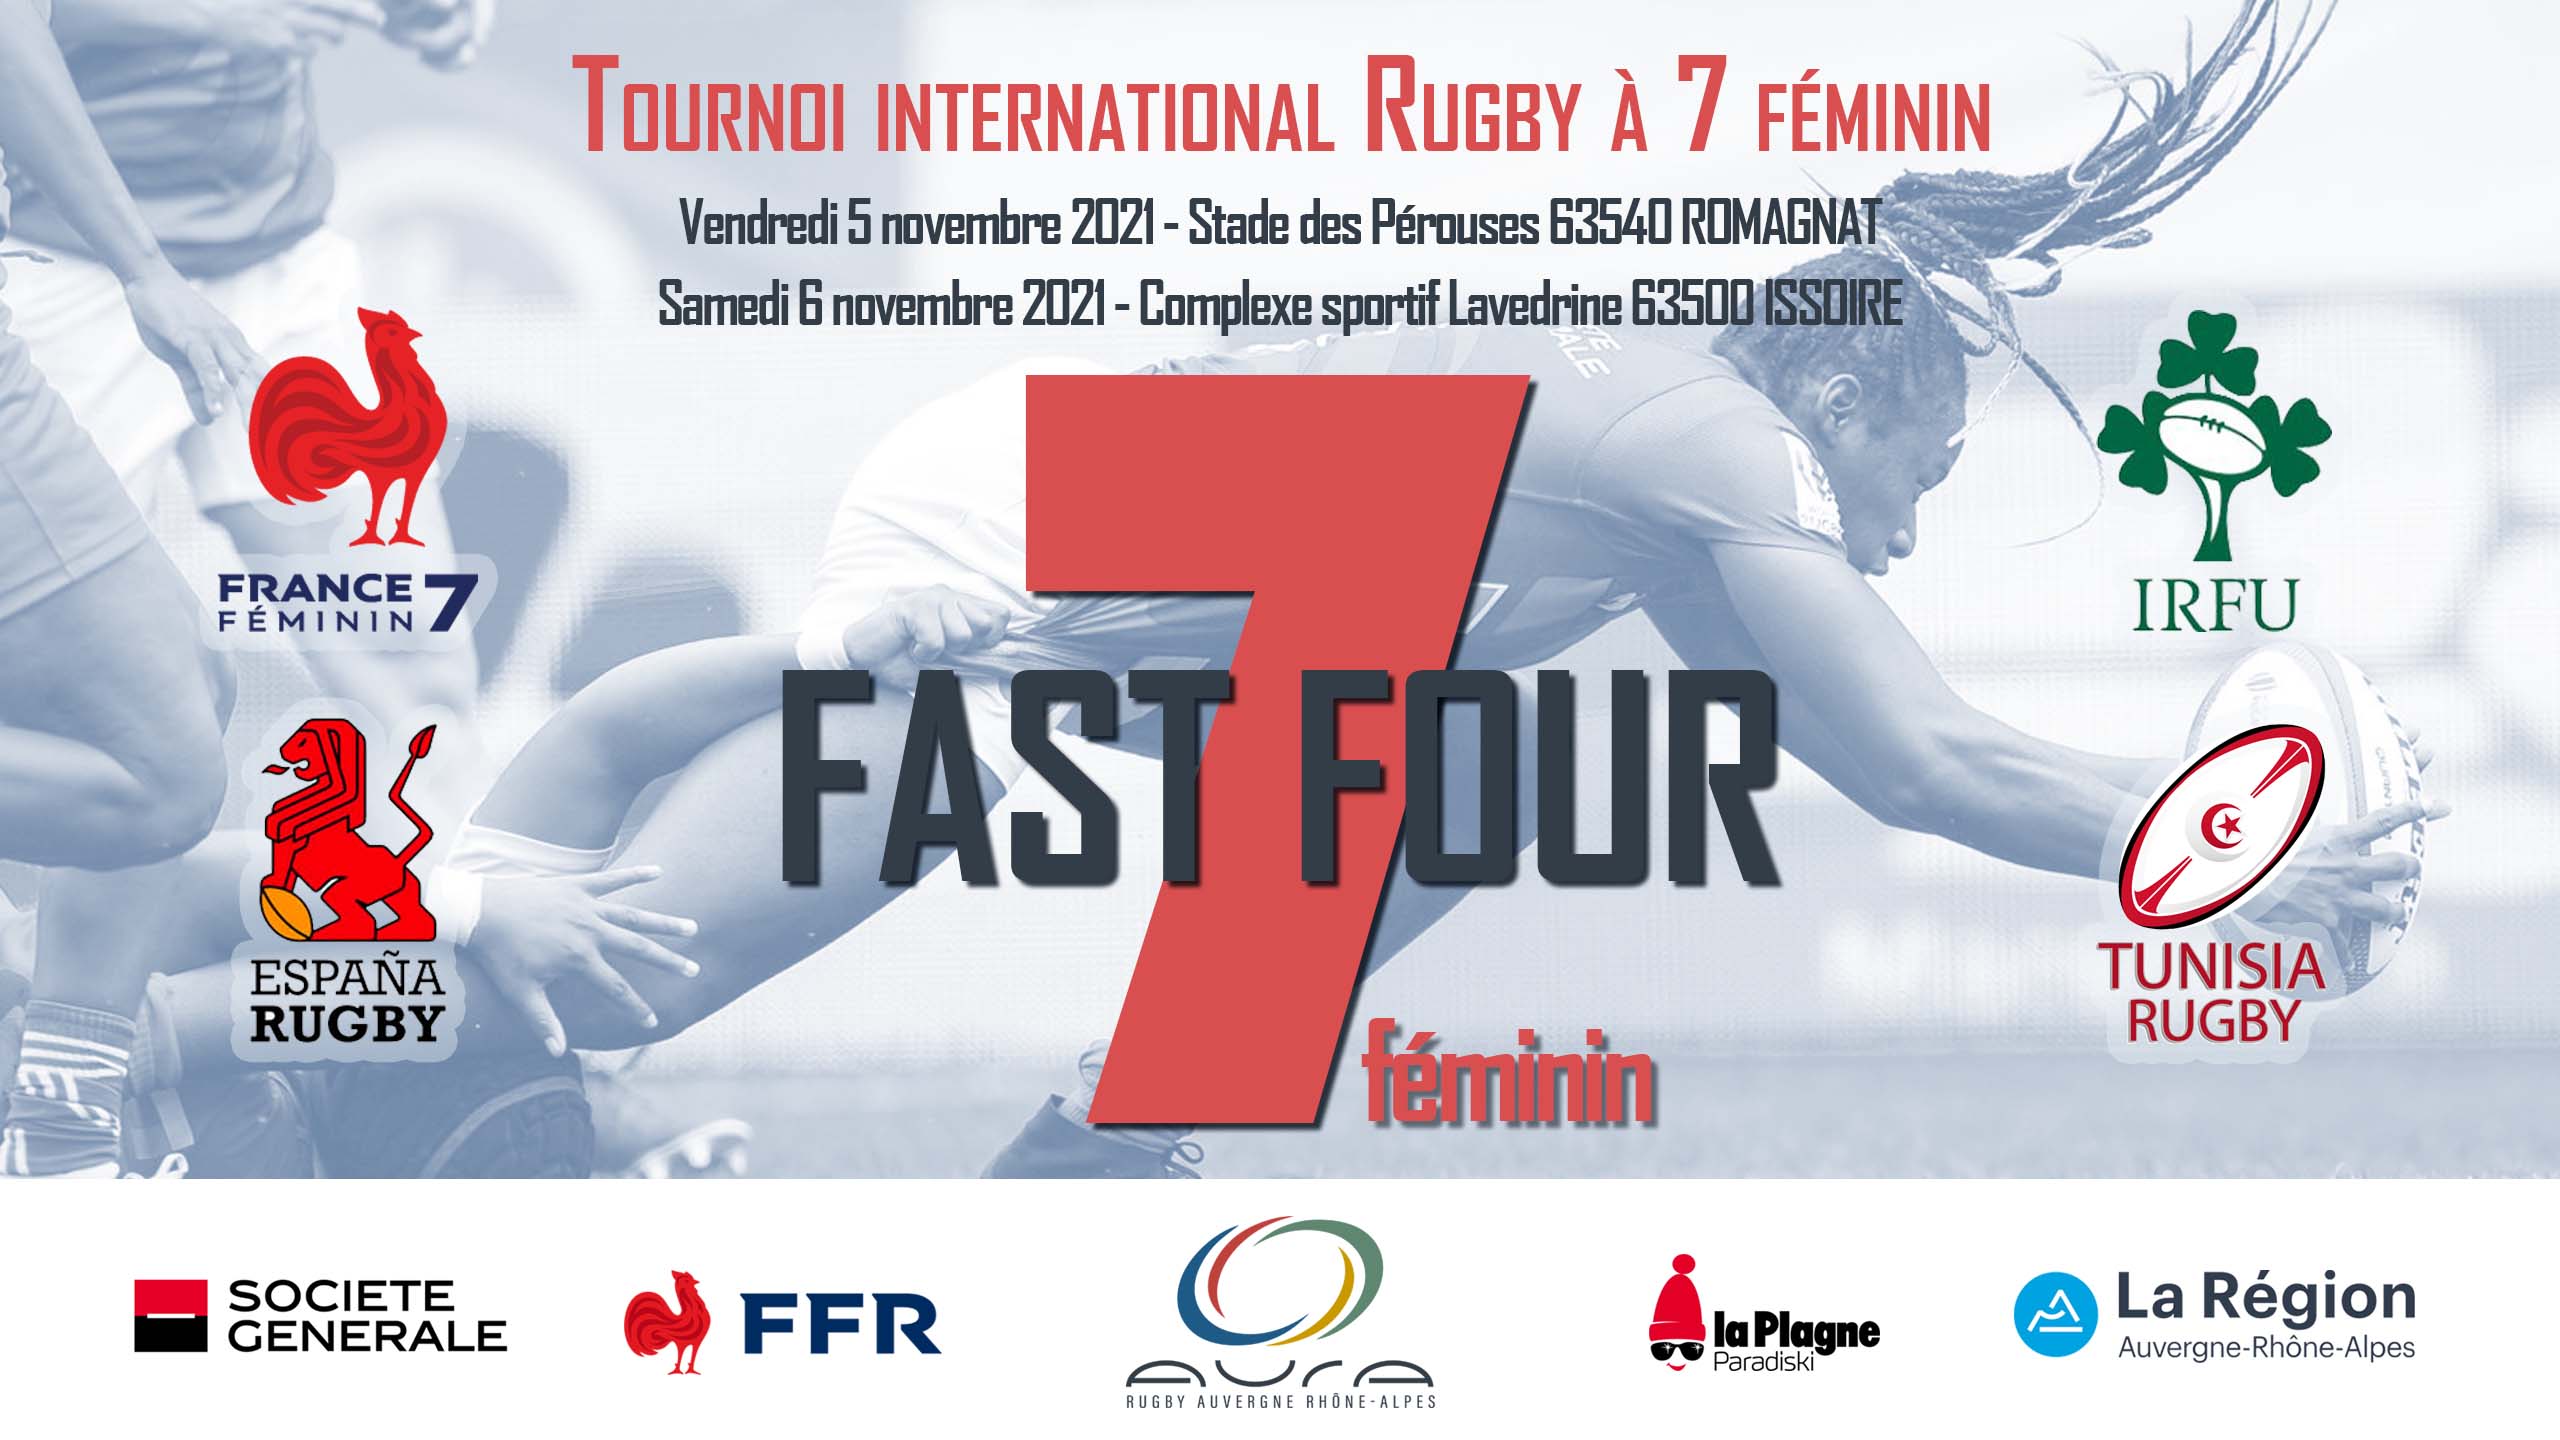 Un tournoi international de Rugby à 7 féminin